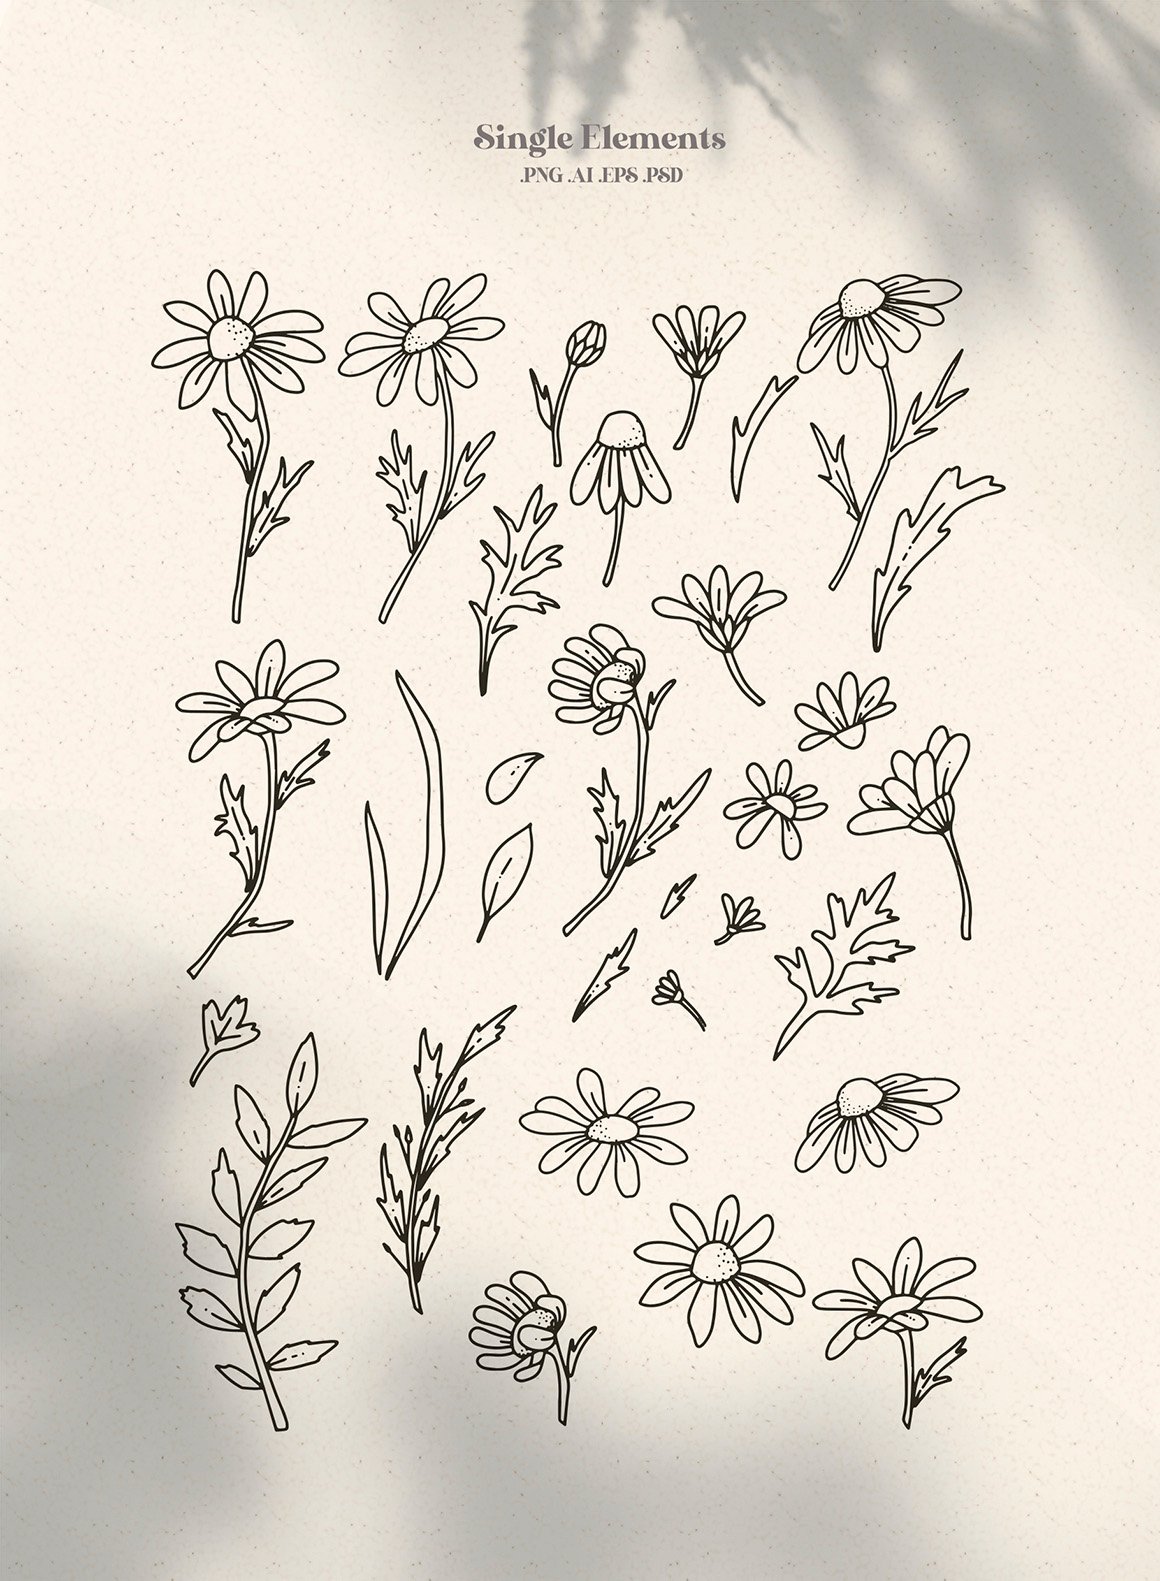 Daisy Flowers - Modern Floral Line Art Set